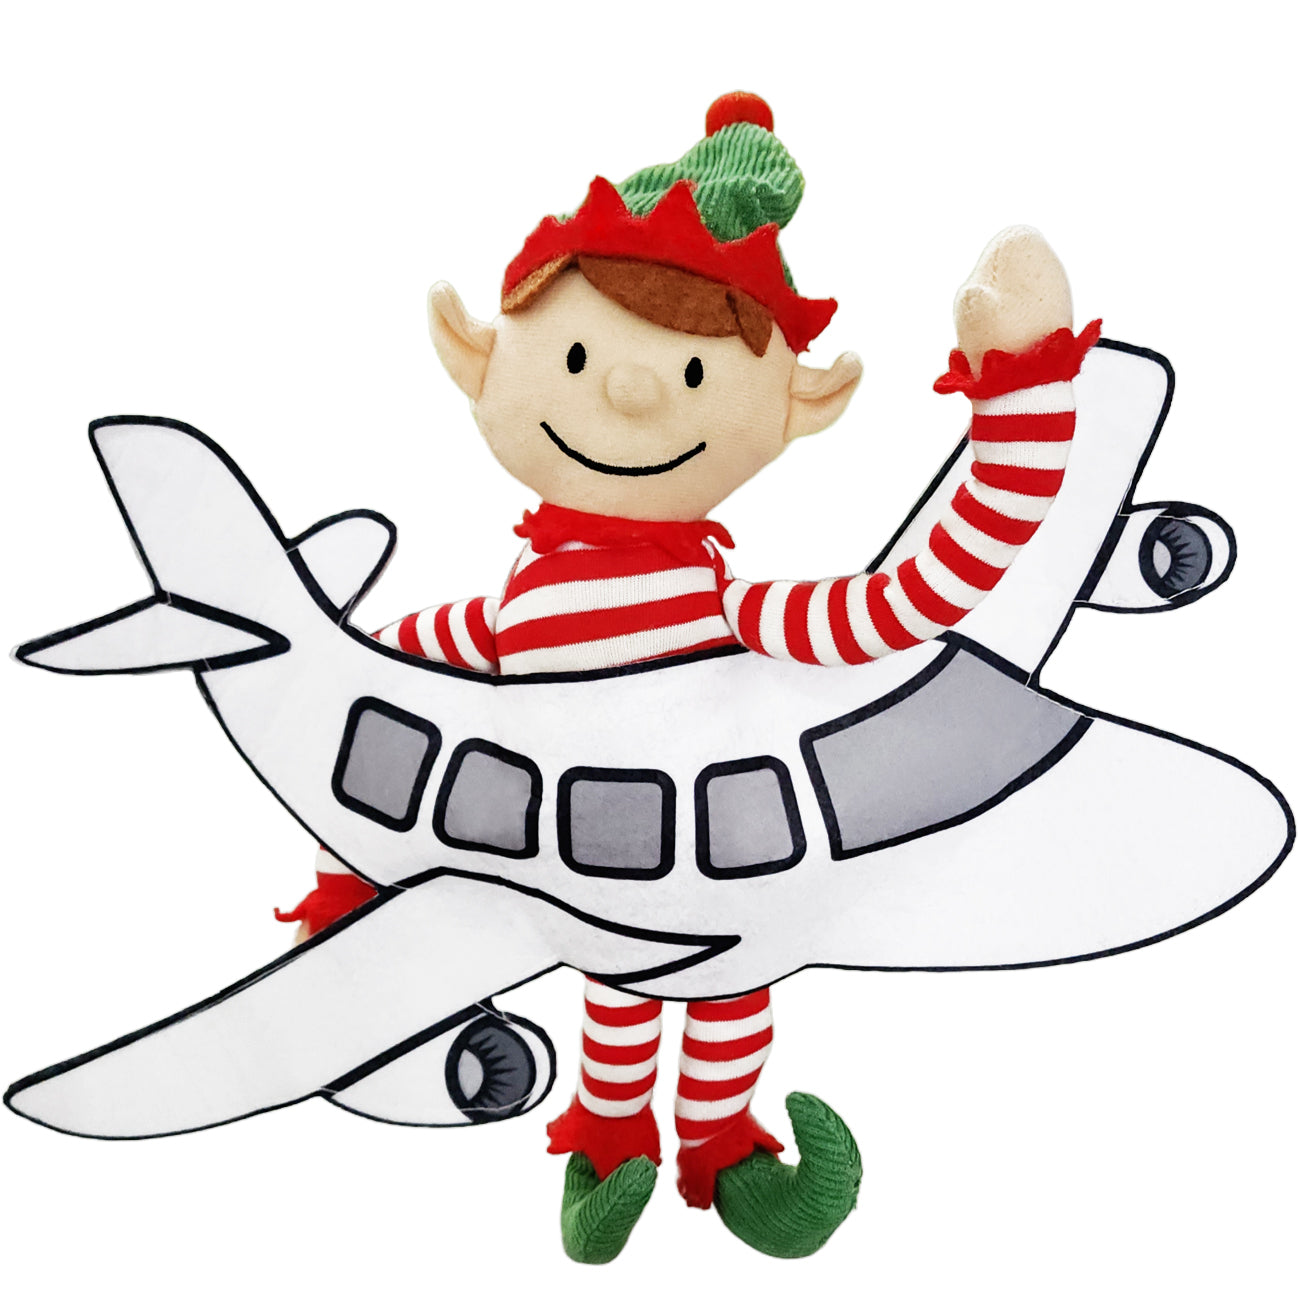 Elf wearing a plane costume